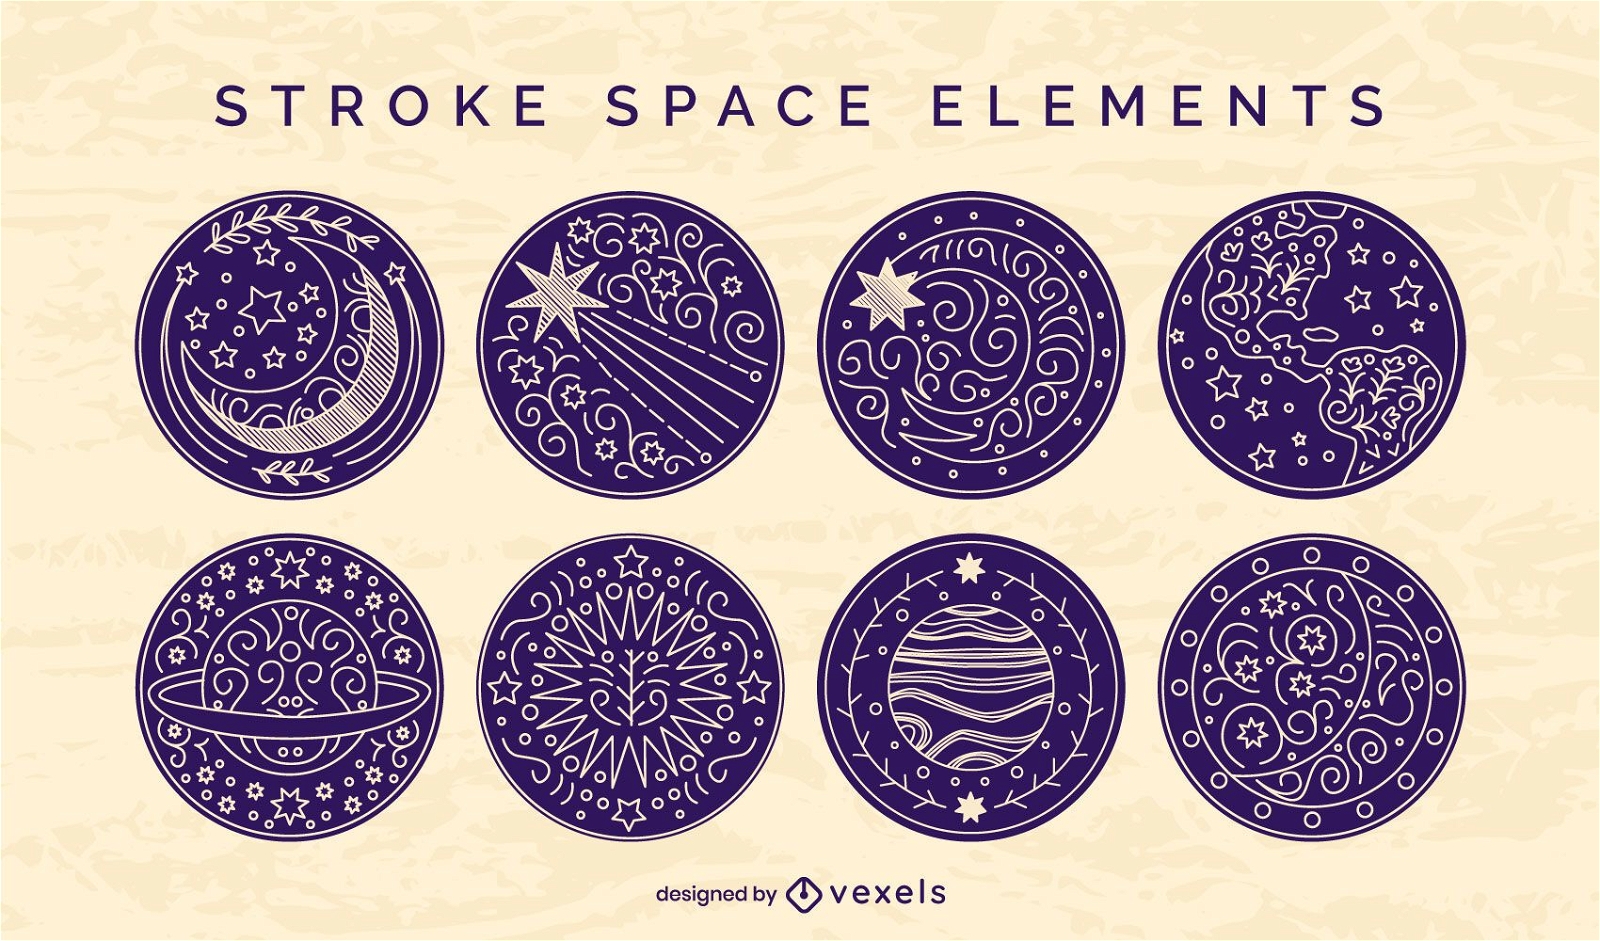 Space elements badge stroke set